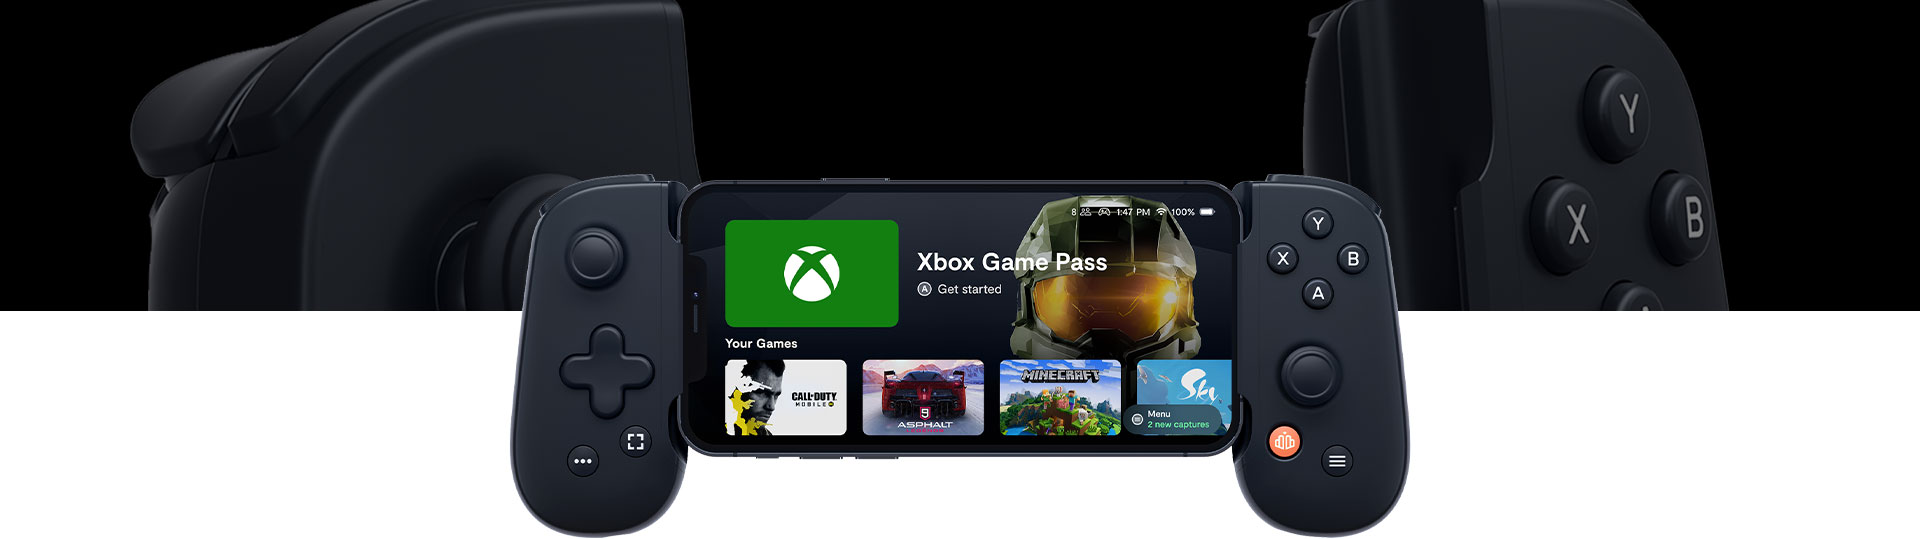 Domovská obrazovka ovladače Backbone One s aplikací Xbox Game Pass a hrami Call of Duty, Asphalt, Minecraft a Sky.